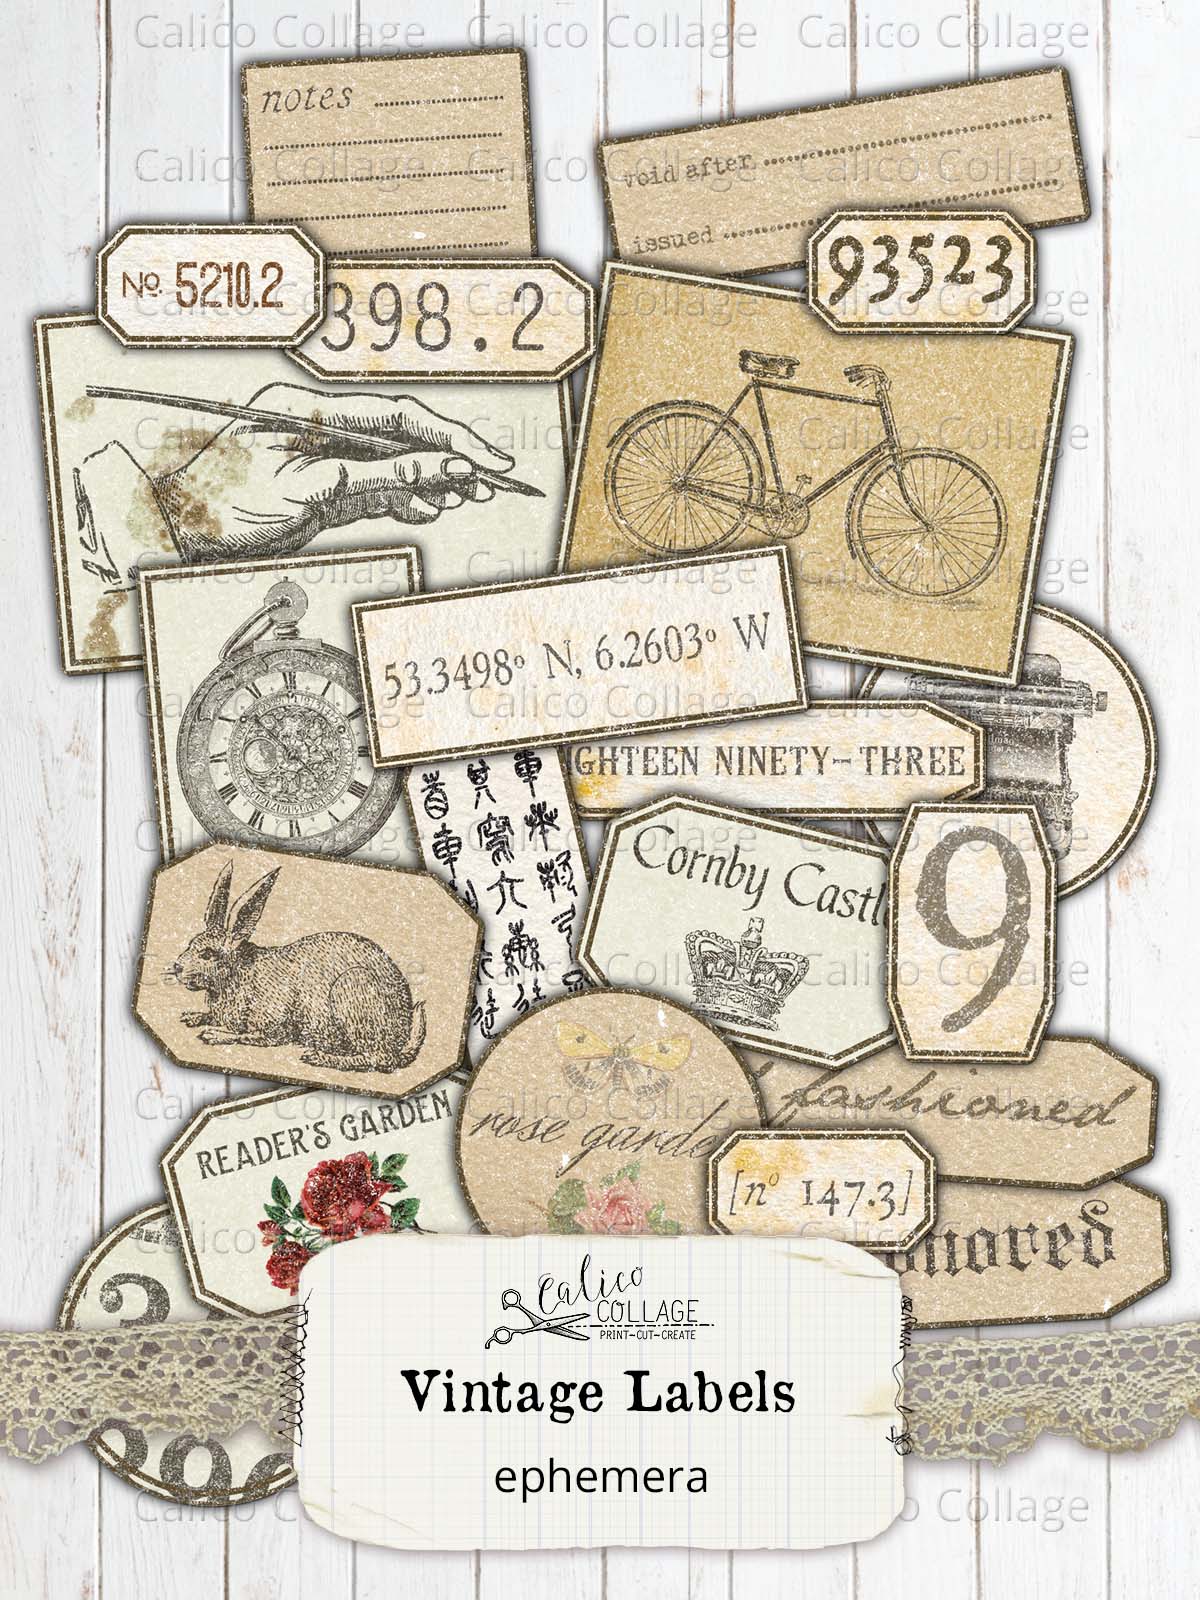 Vintage Stickers, 50 Scrapbook Stickers Vintage Diary Supplies